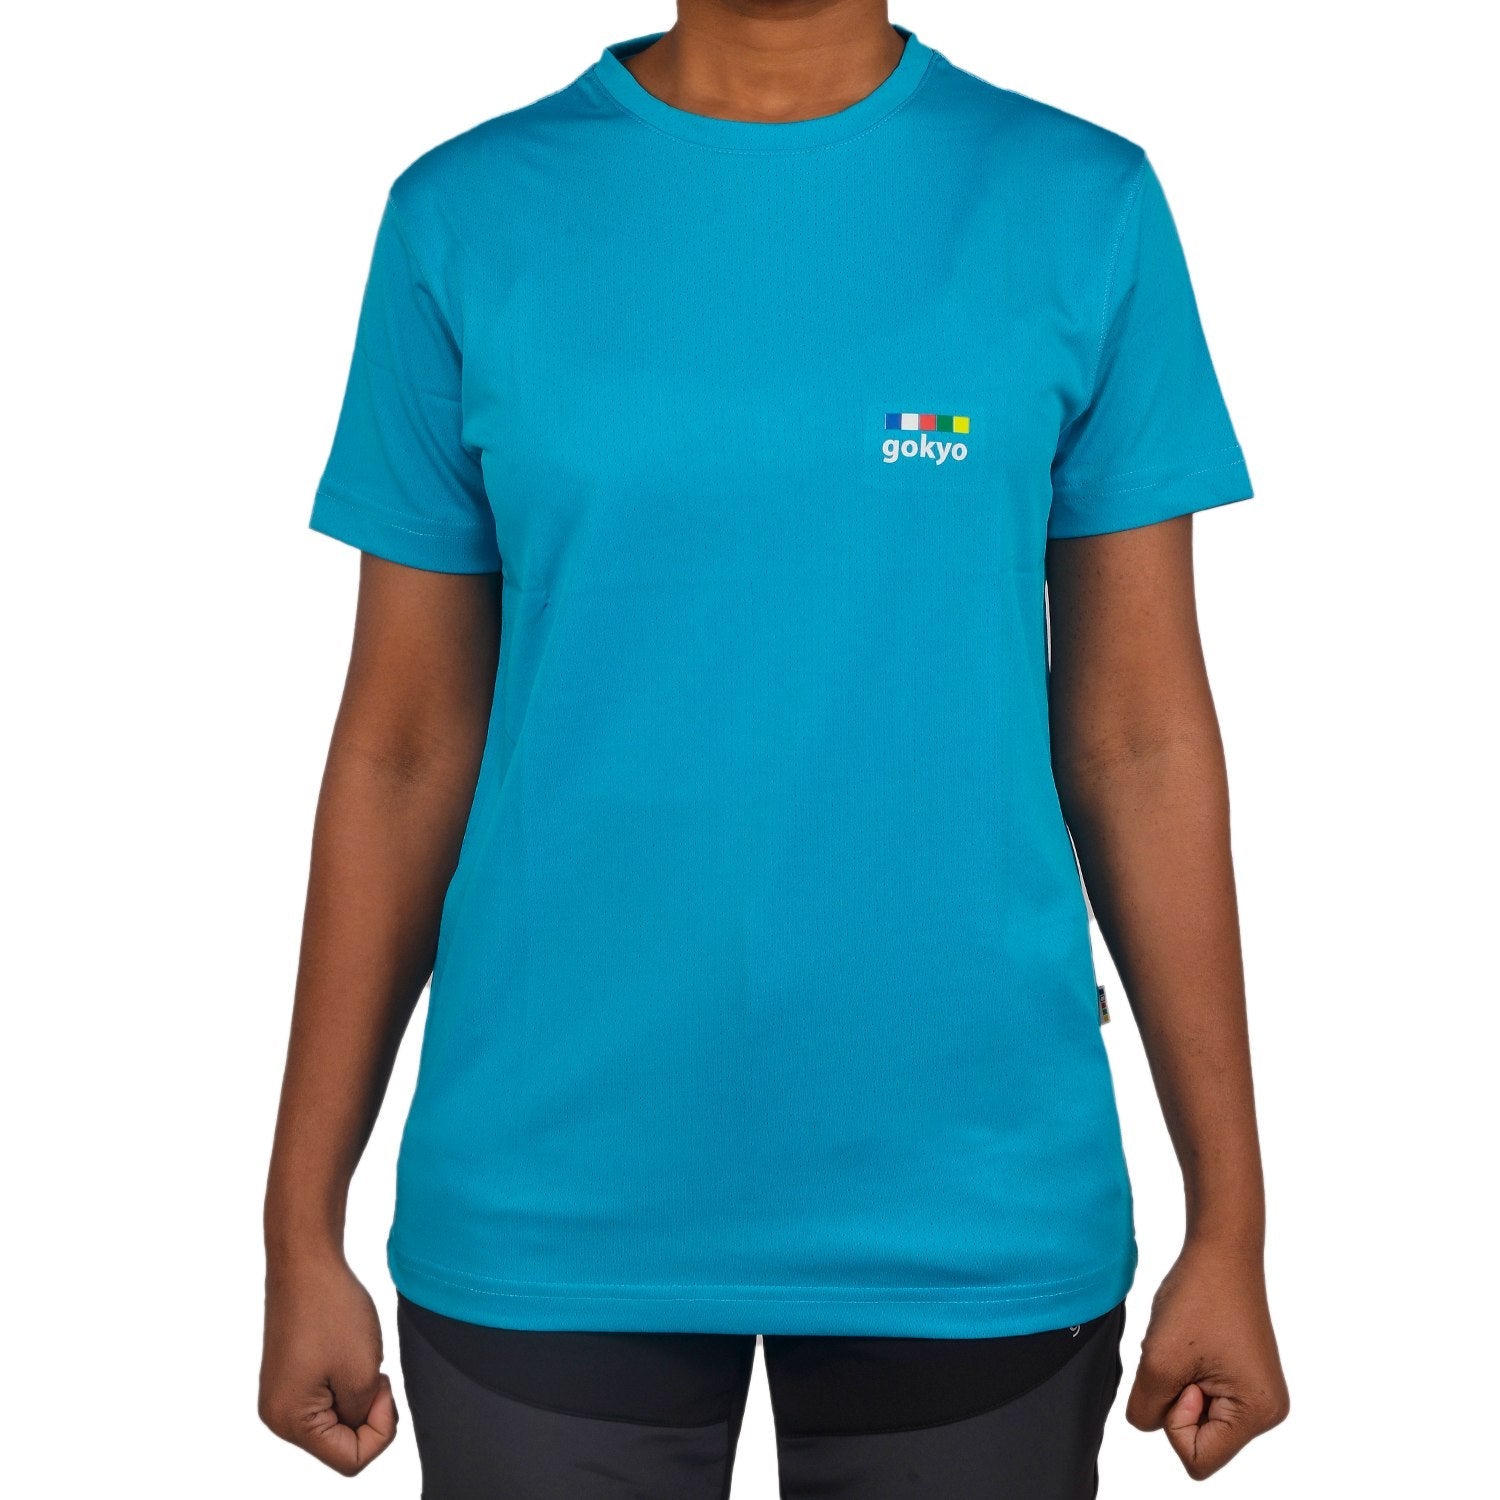 Buy Gokyo Kalimpong Activewear DryFit Tshirt - Women Mint | Trekking & Hiking T-shirts at Gokyo Outdoor Clothing & Gear